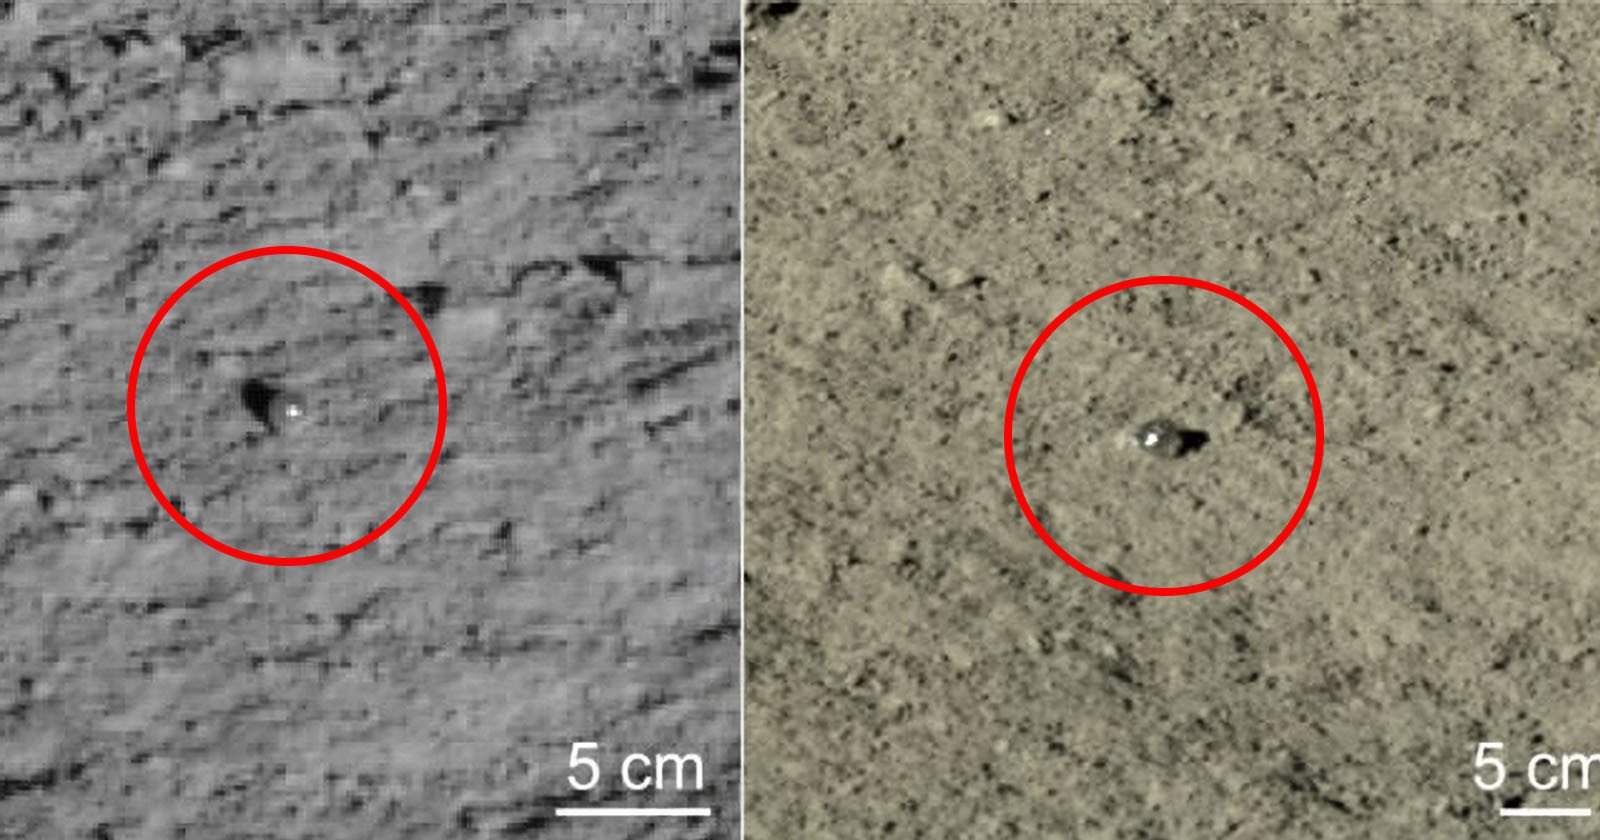  china rover captures photos glass orbs far side 